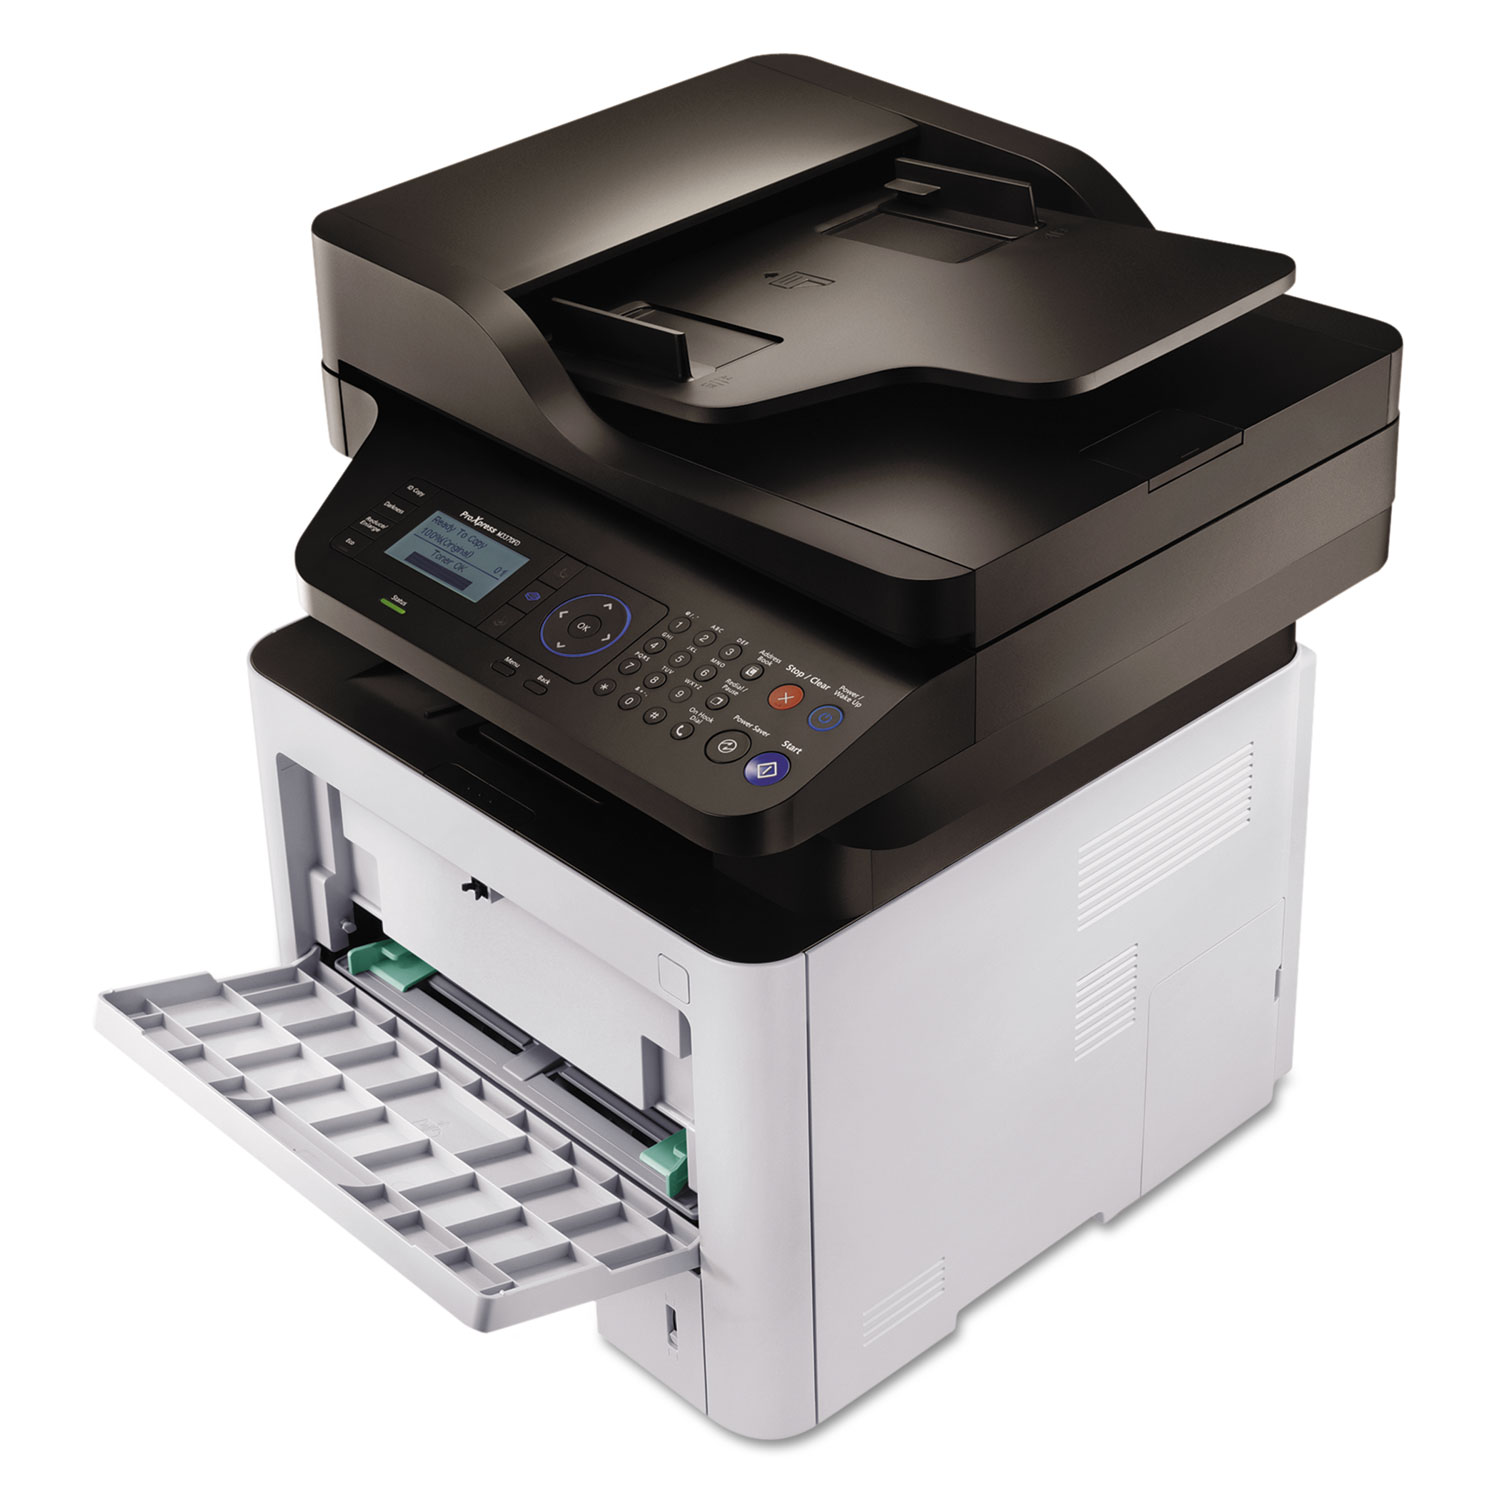 ProXpress SL-M3370FD Laser Multifunction Printer, Copy/Fax/Print/Scan